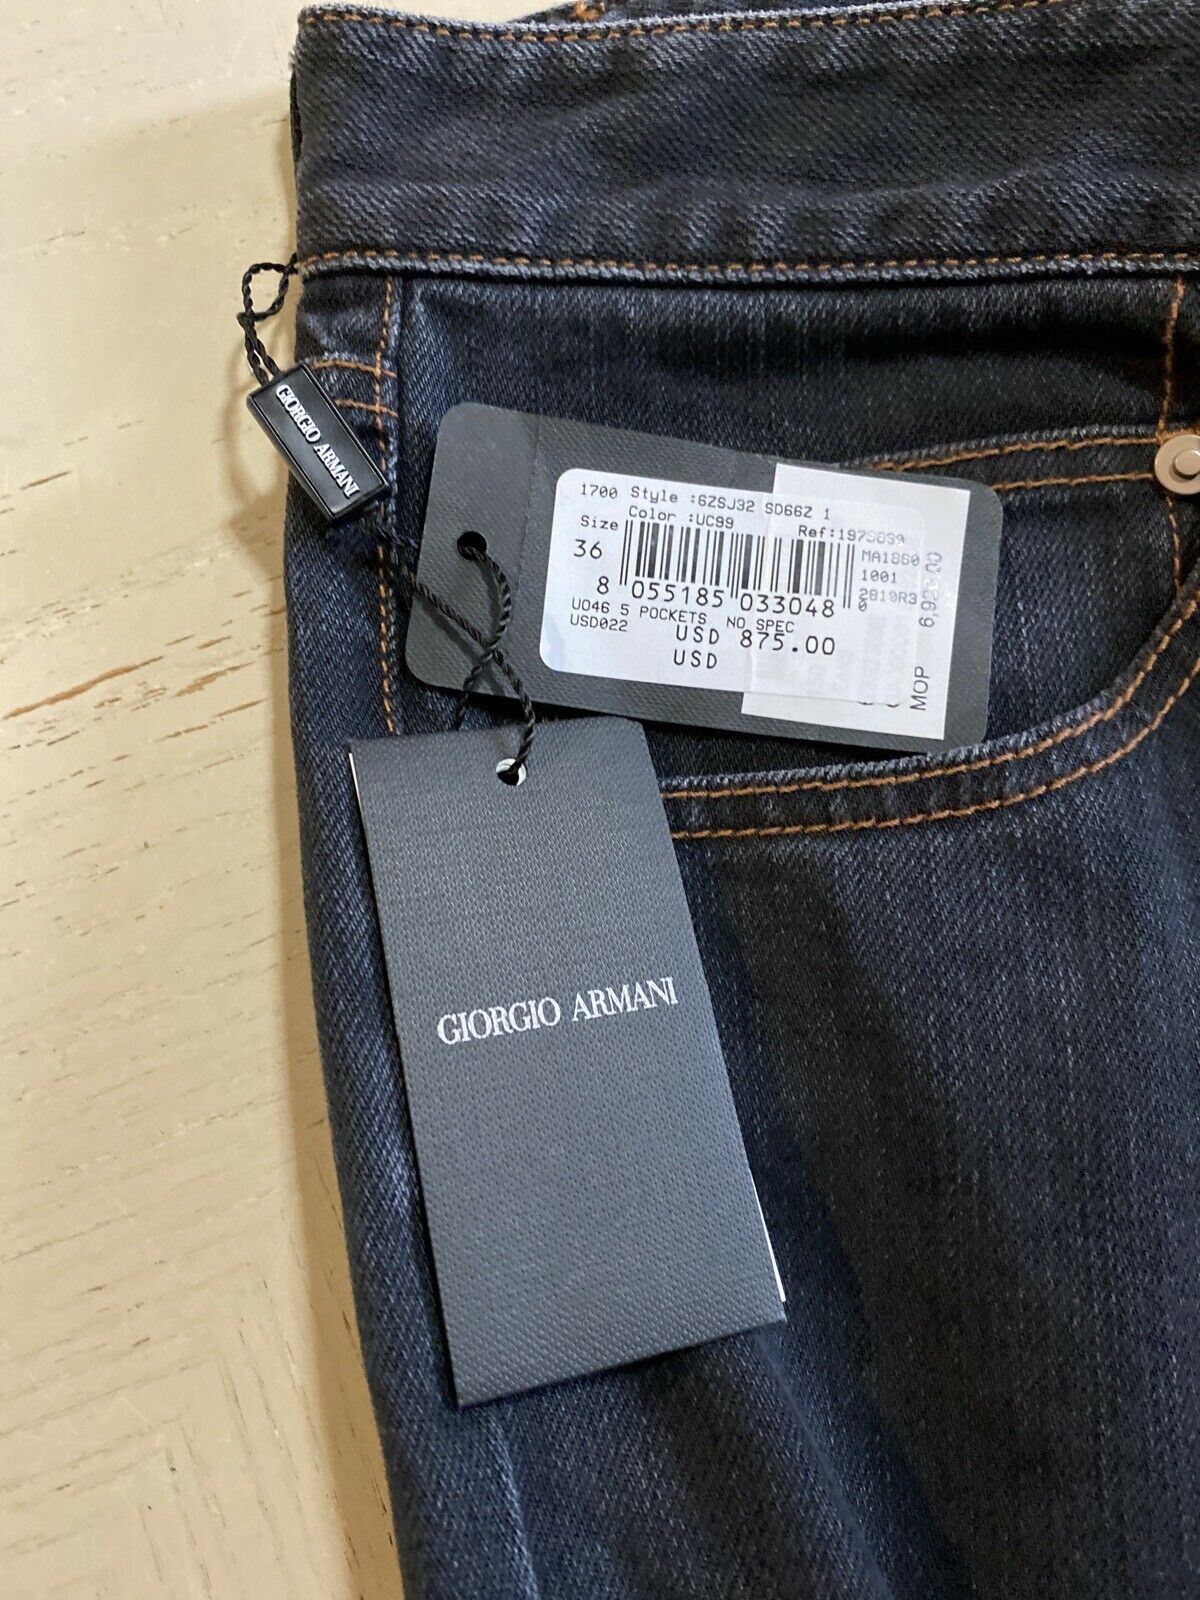 NWT $875 Giorgio Armani Men Jeans Pants  Black 36 US ( 52 Eu ) Italy